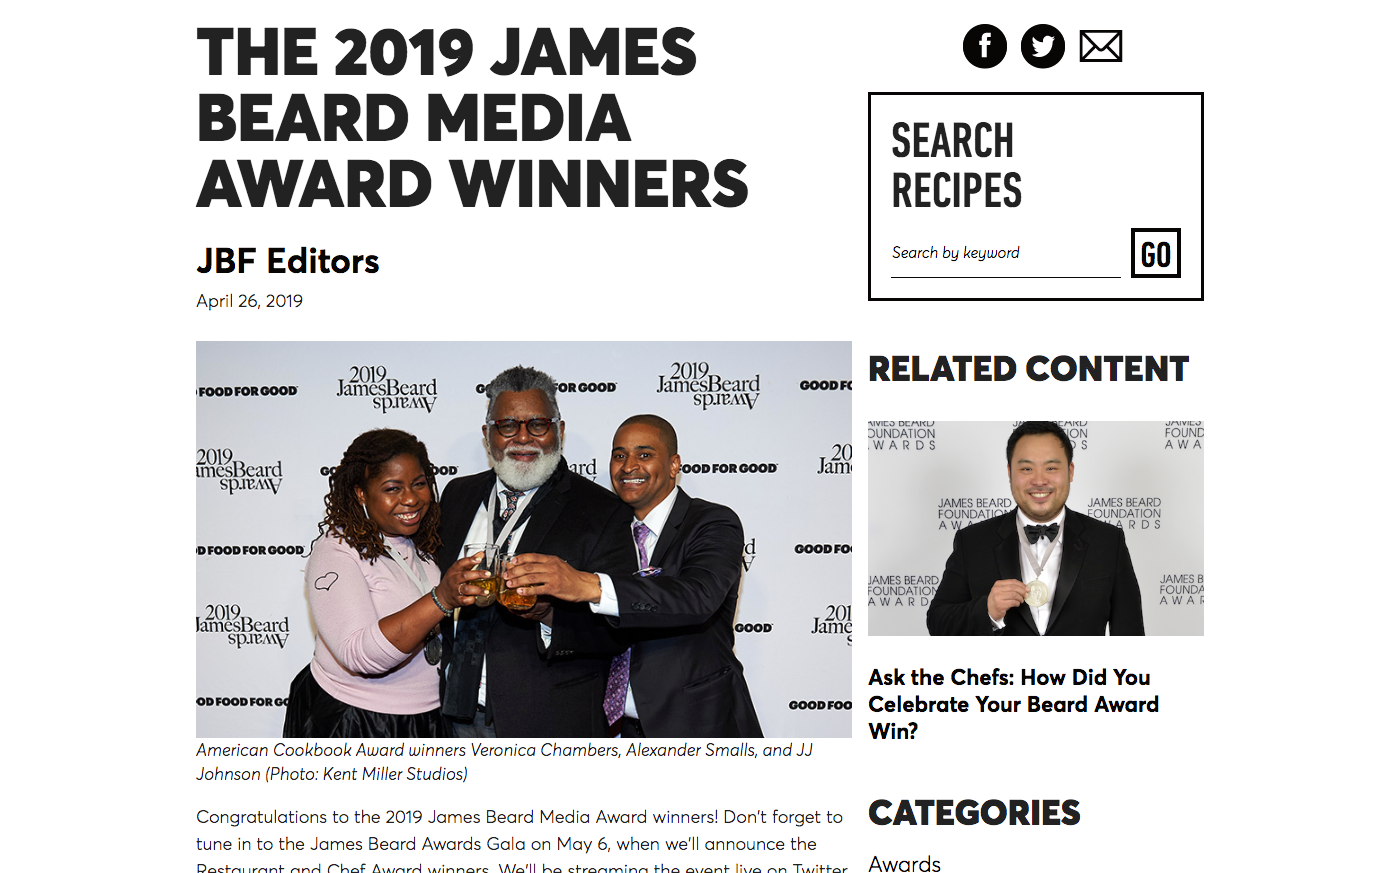 THE 2019 JAMES BEARD MEDIA AWARD WINNERS